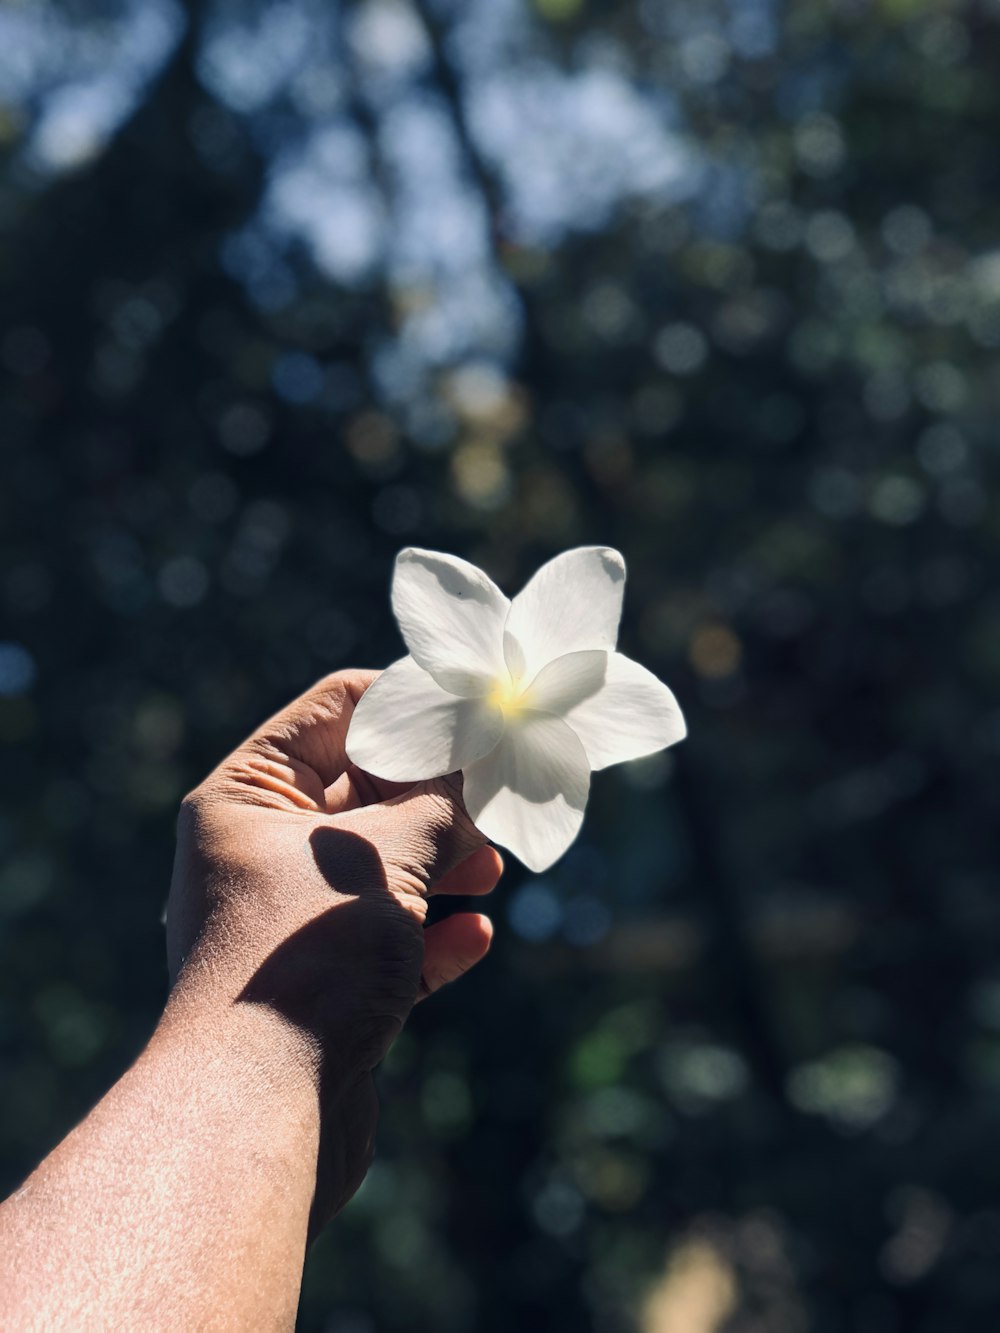 person holding white petaled flower